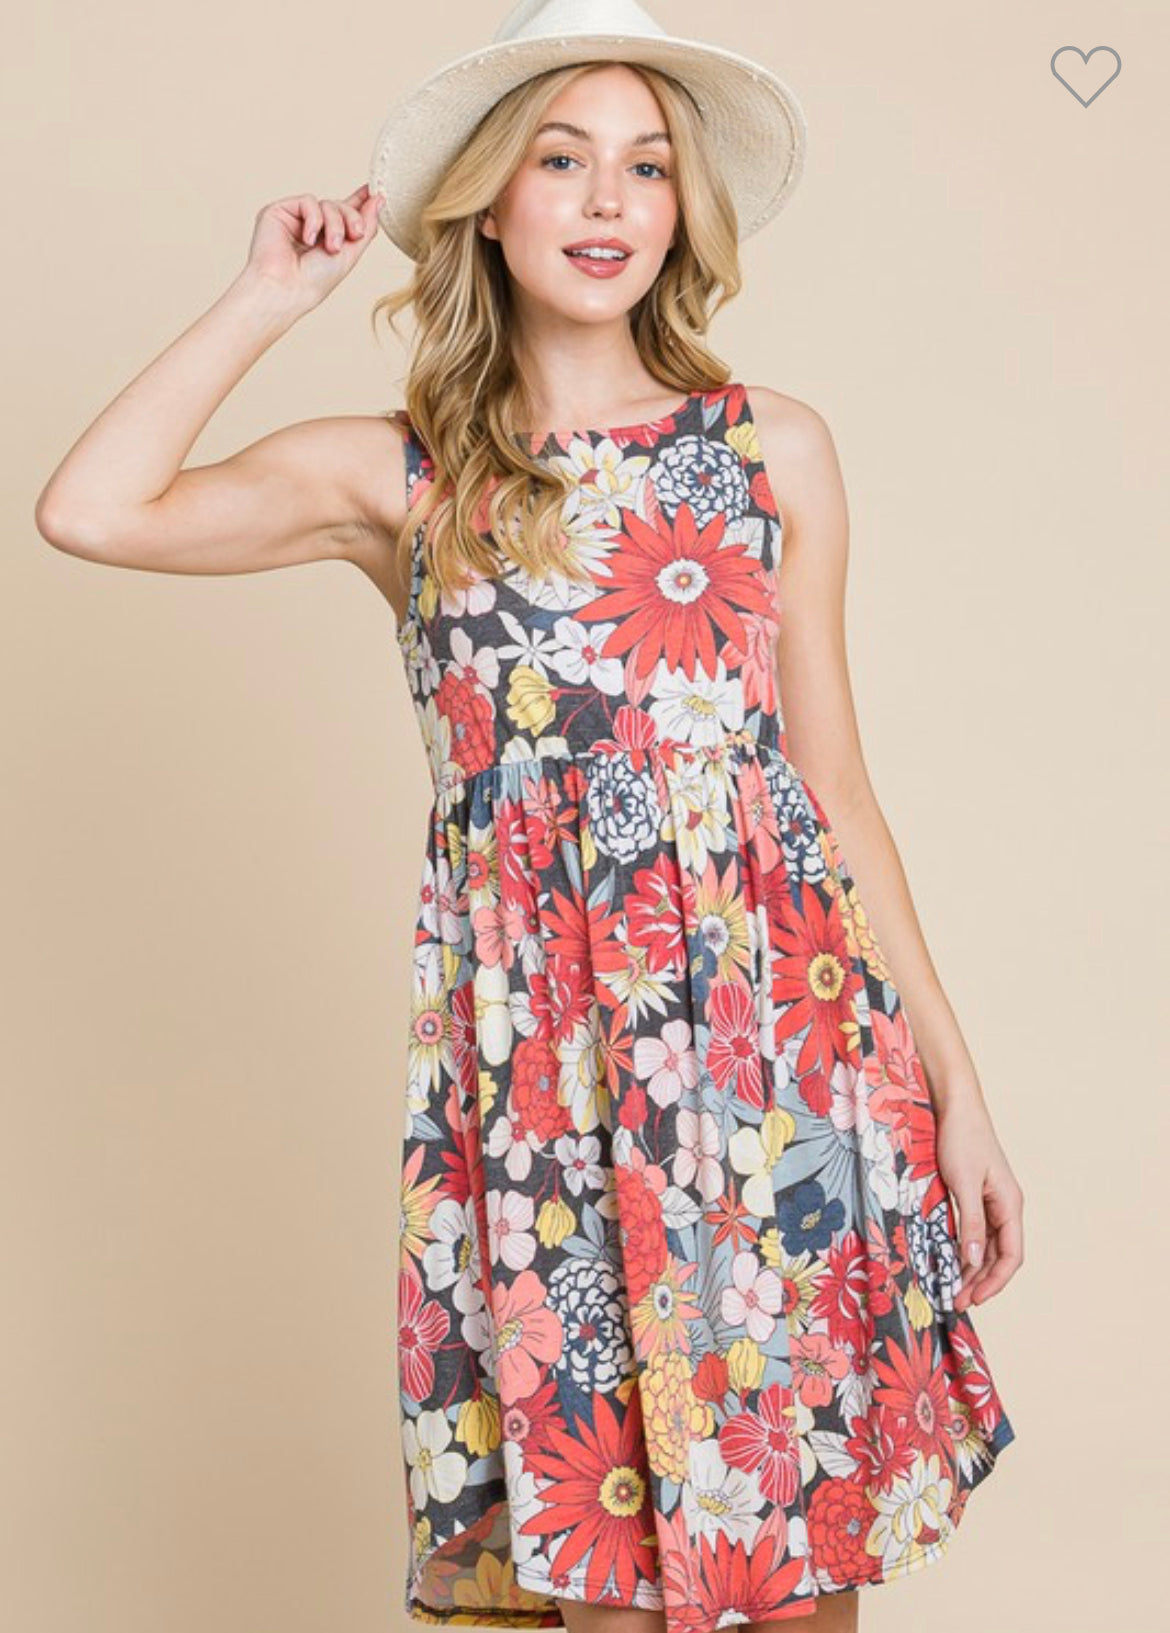 Springy Floral Dress